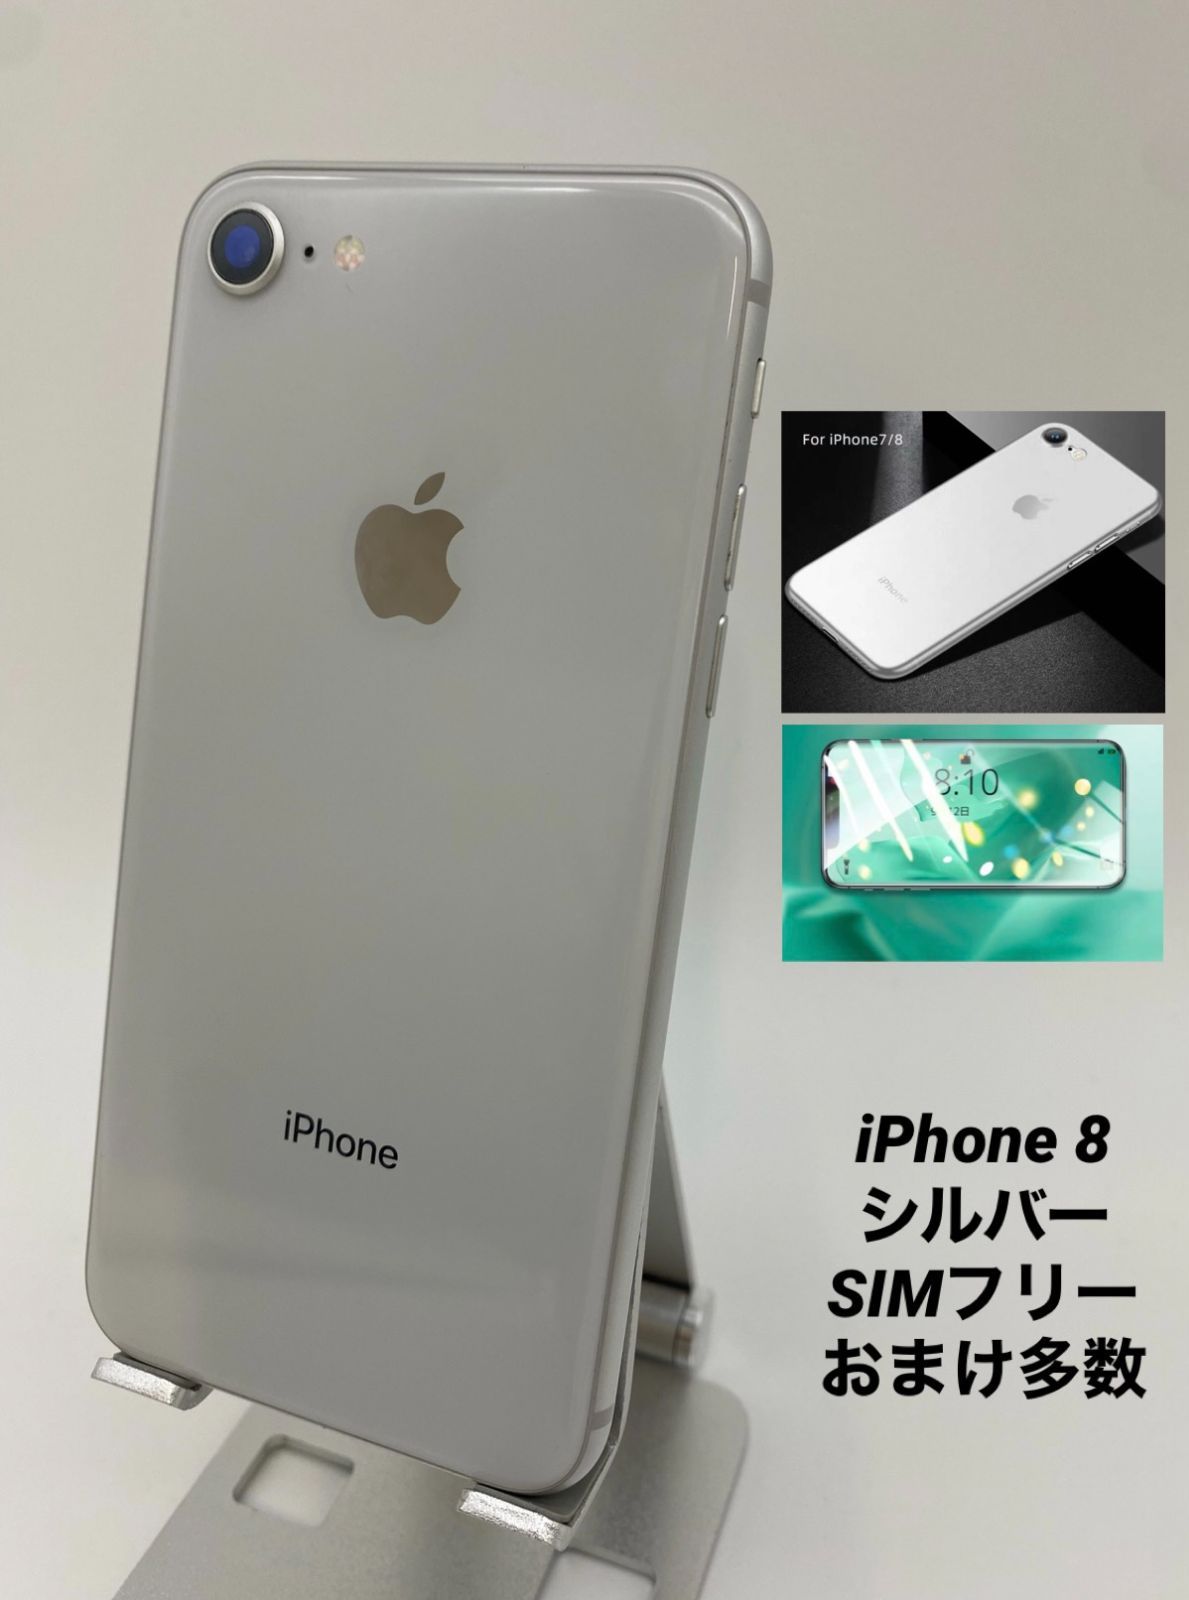 iPhone8 64GB シルバー/シムフリー/大容量2300mAh 新品バッテリー100 